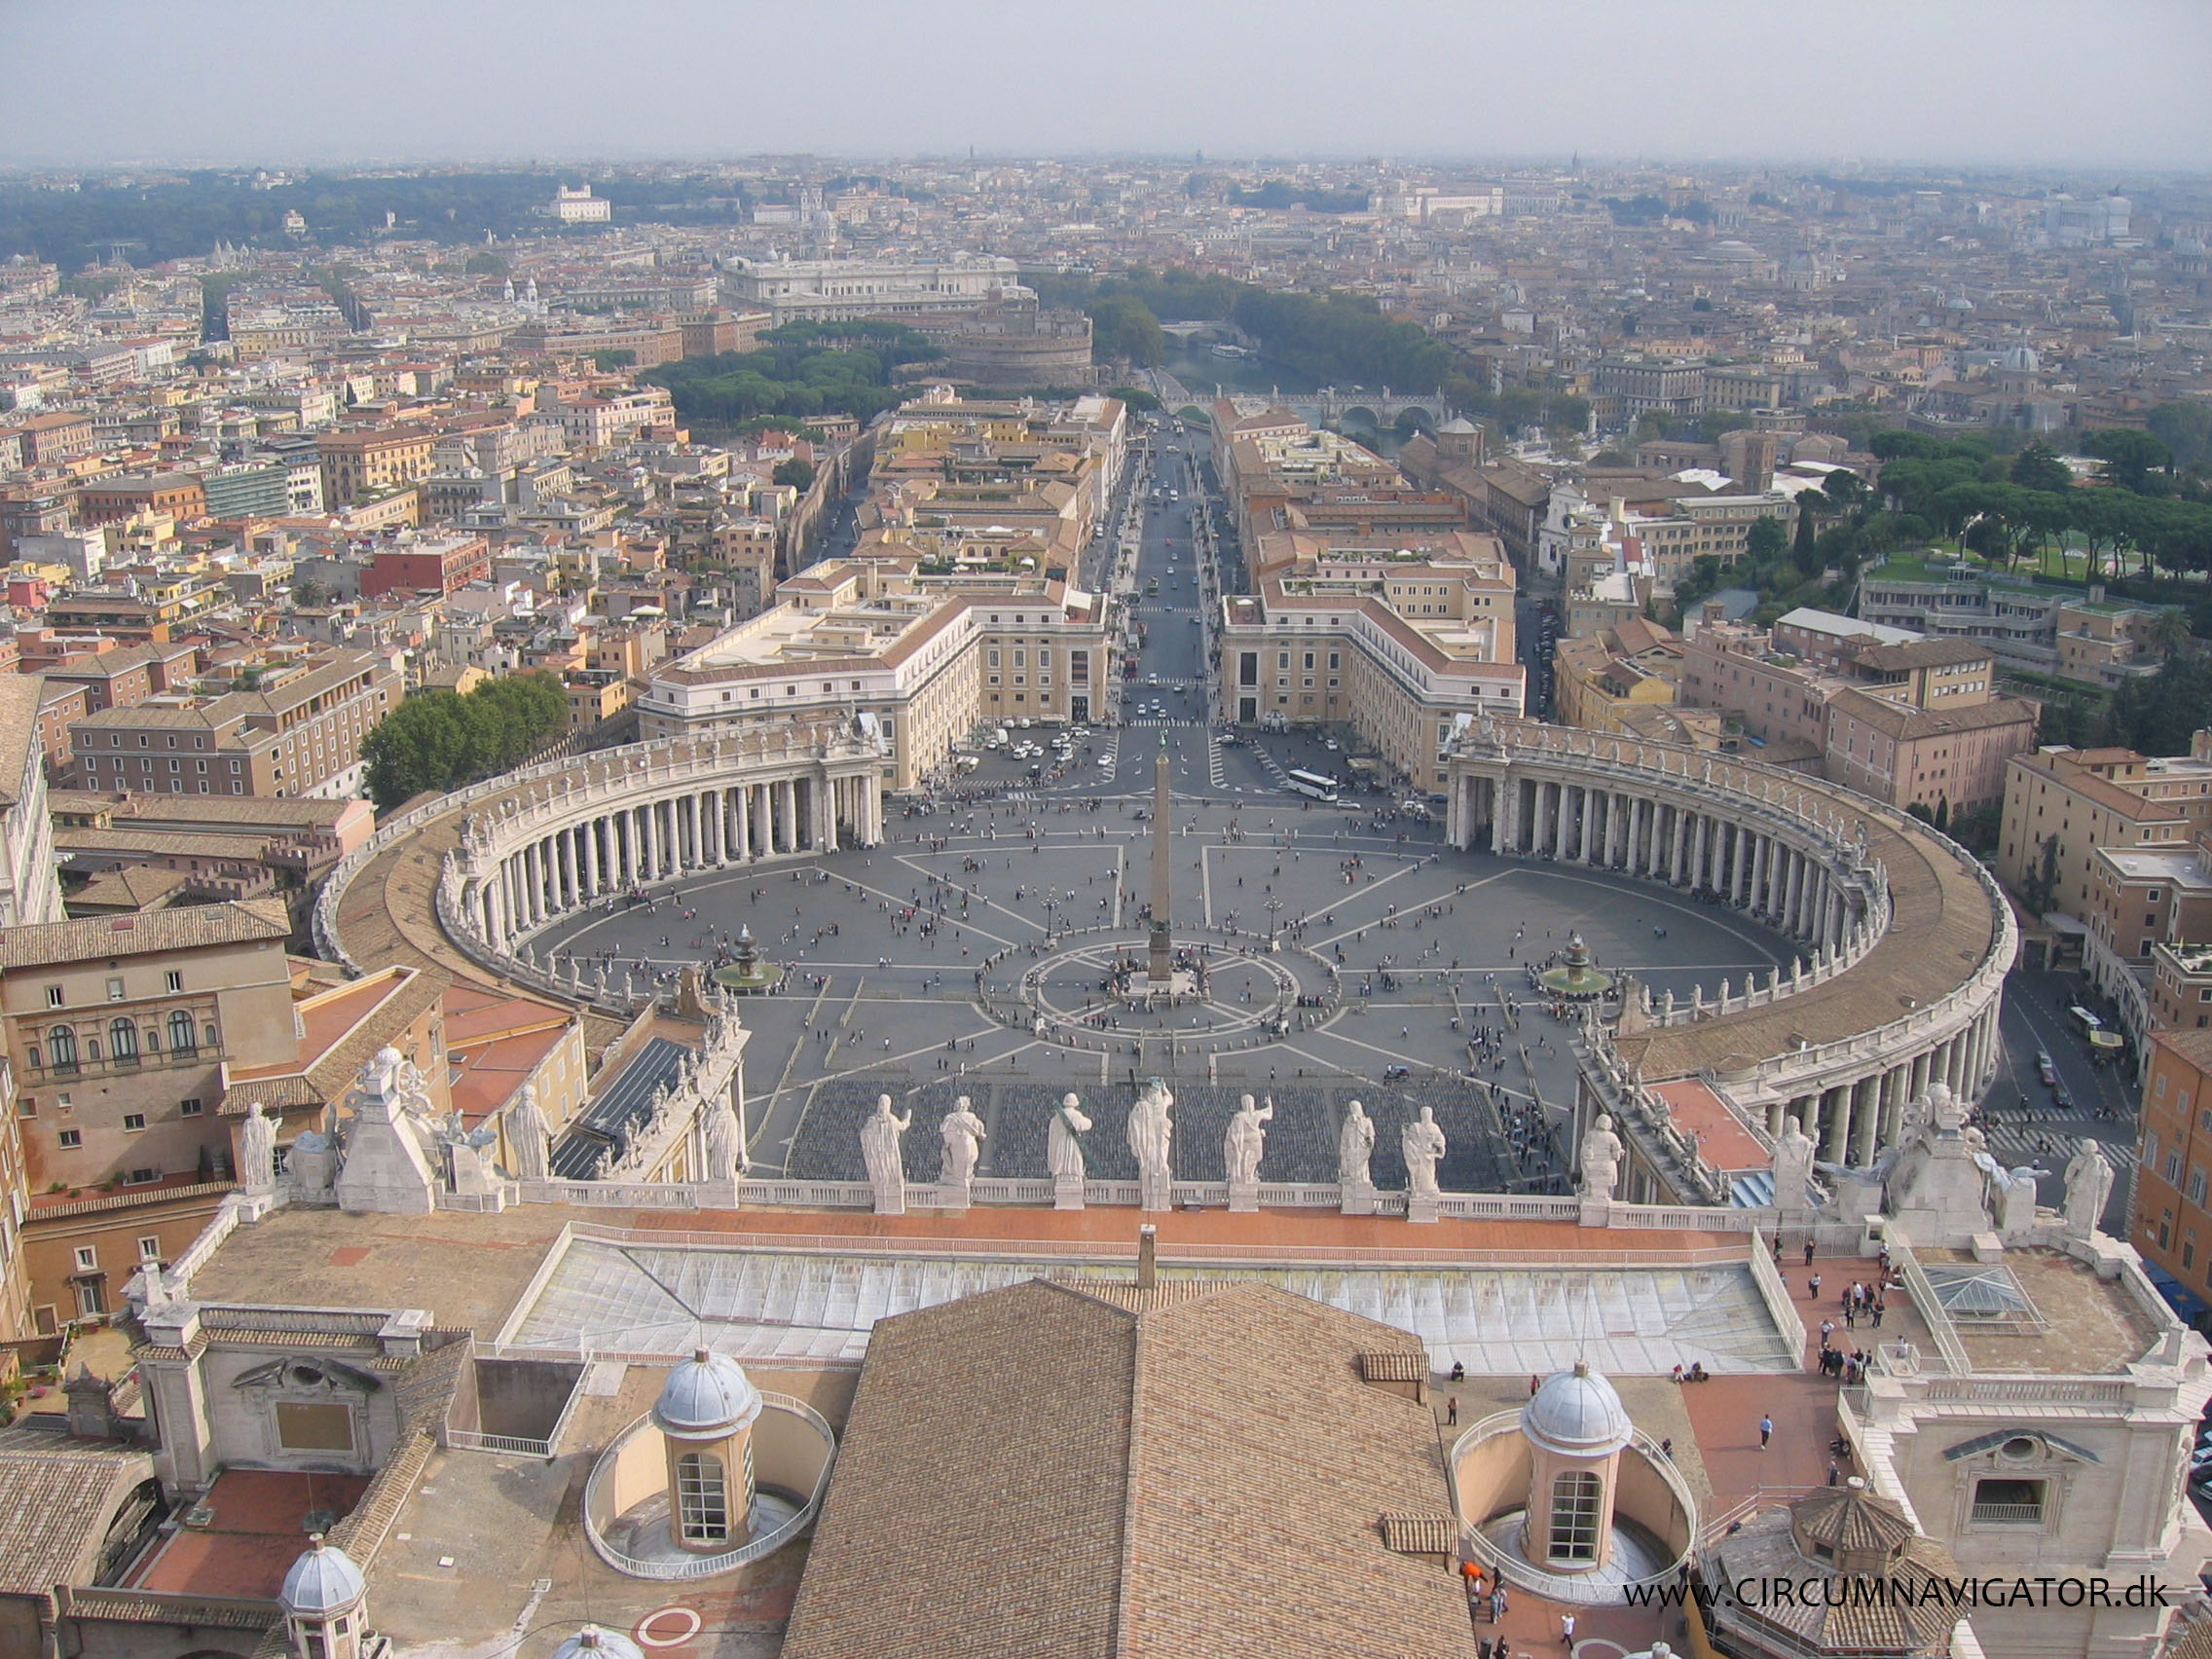 Vatican City State – “Bye Bye” Pope Benedict XVI